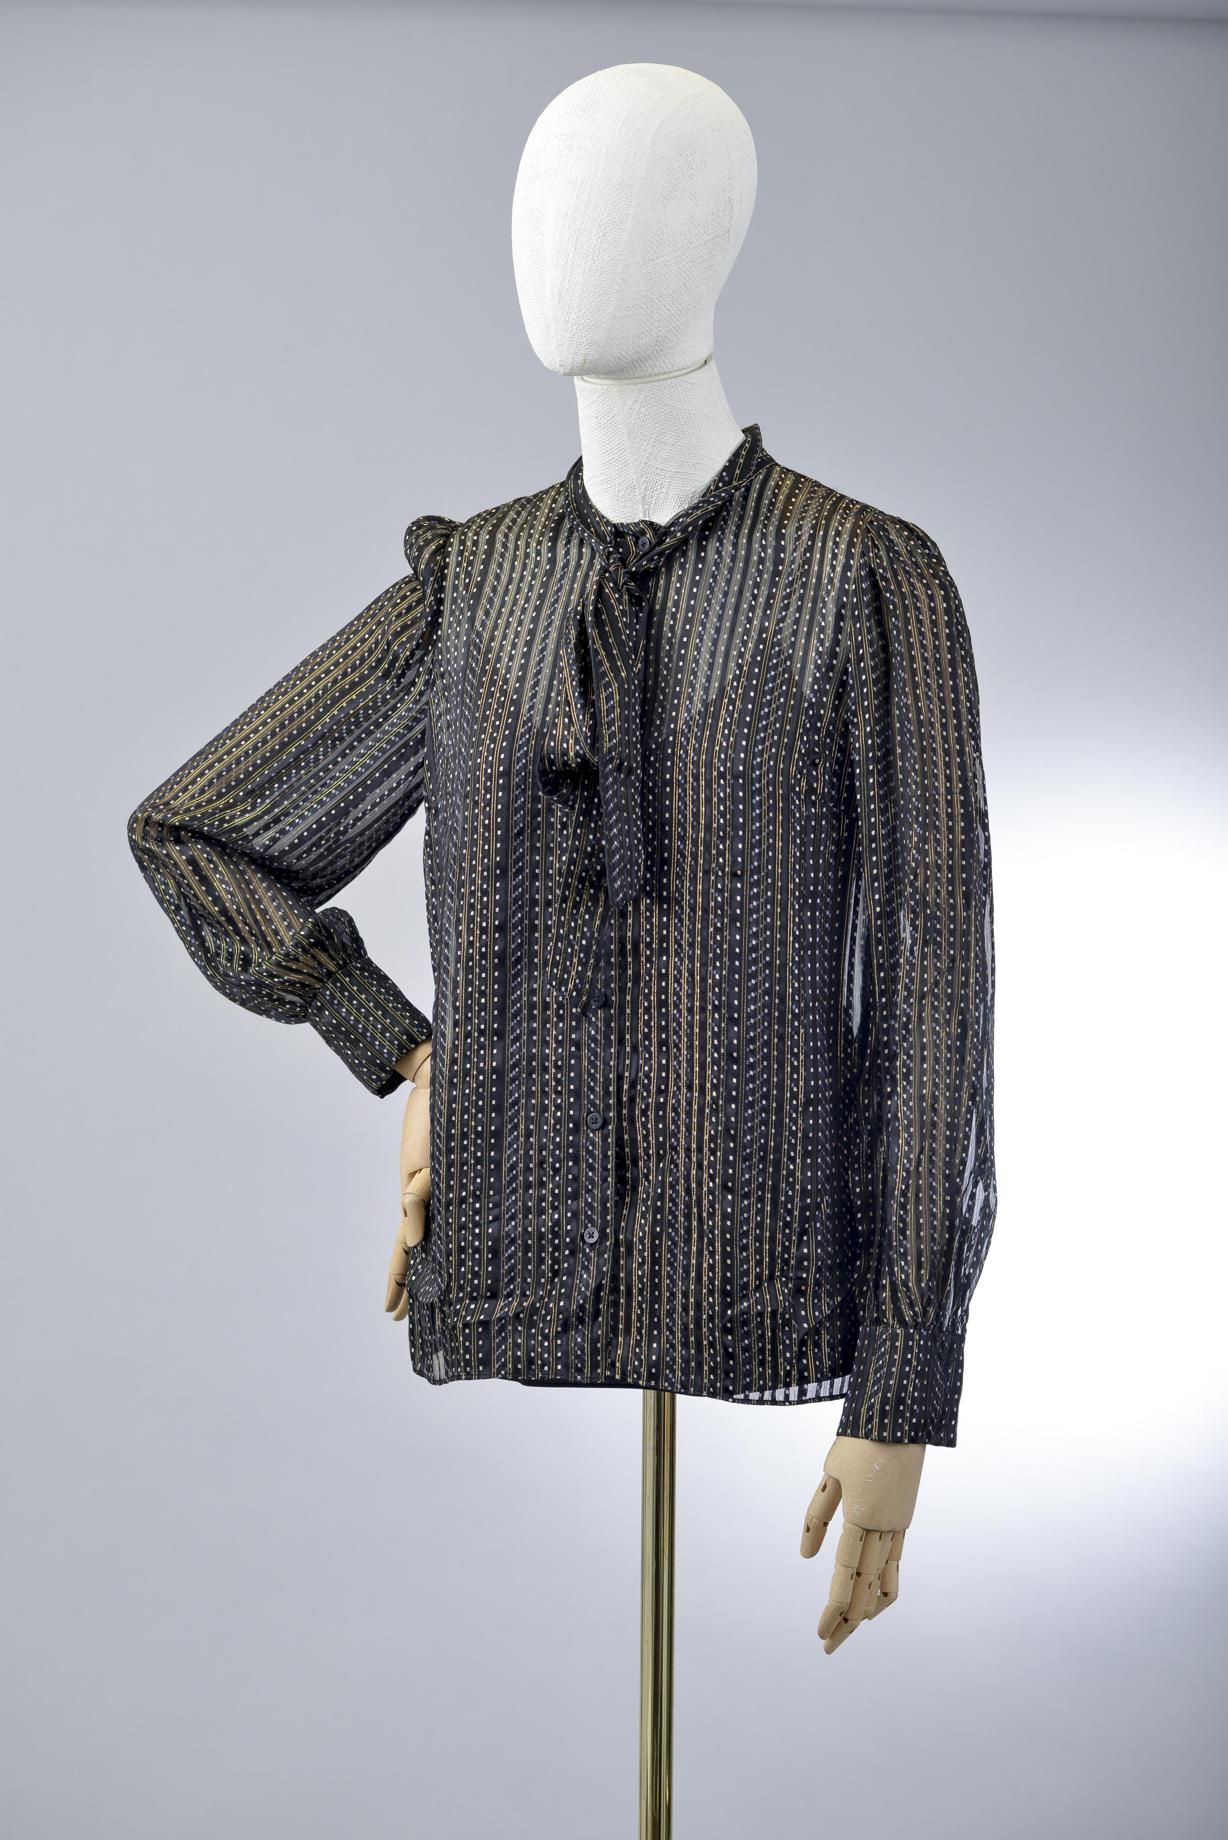 Null *尺寸S DVF - Diane Von Fürstenberg

套装包括。

-丝质雪纺上衣，型号为 "DVF Lanie"，缝制并印有金色和黑色&hellip;